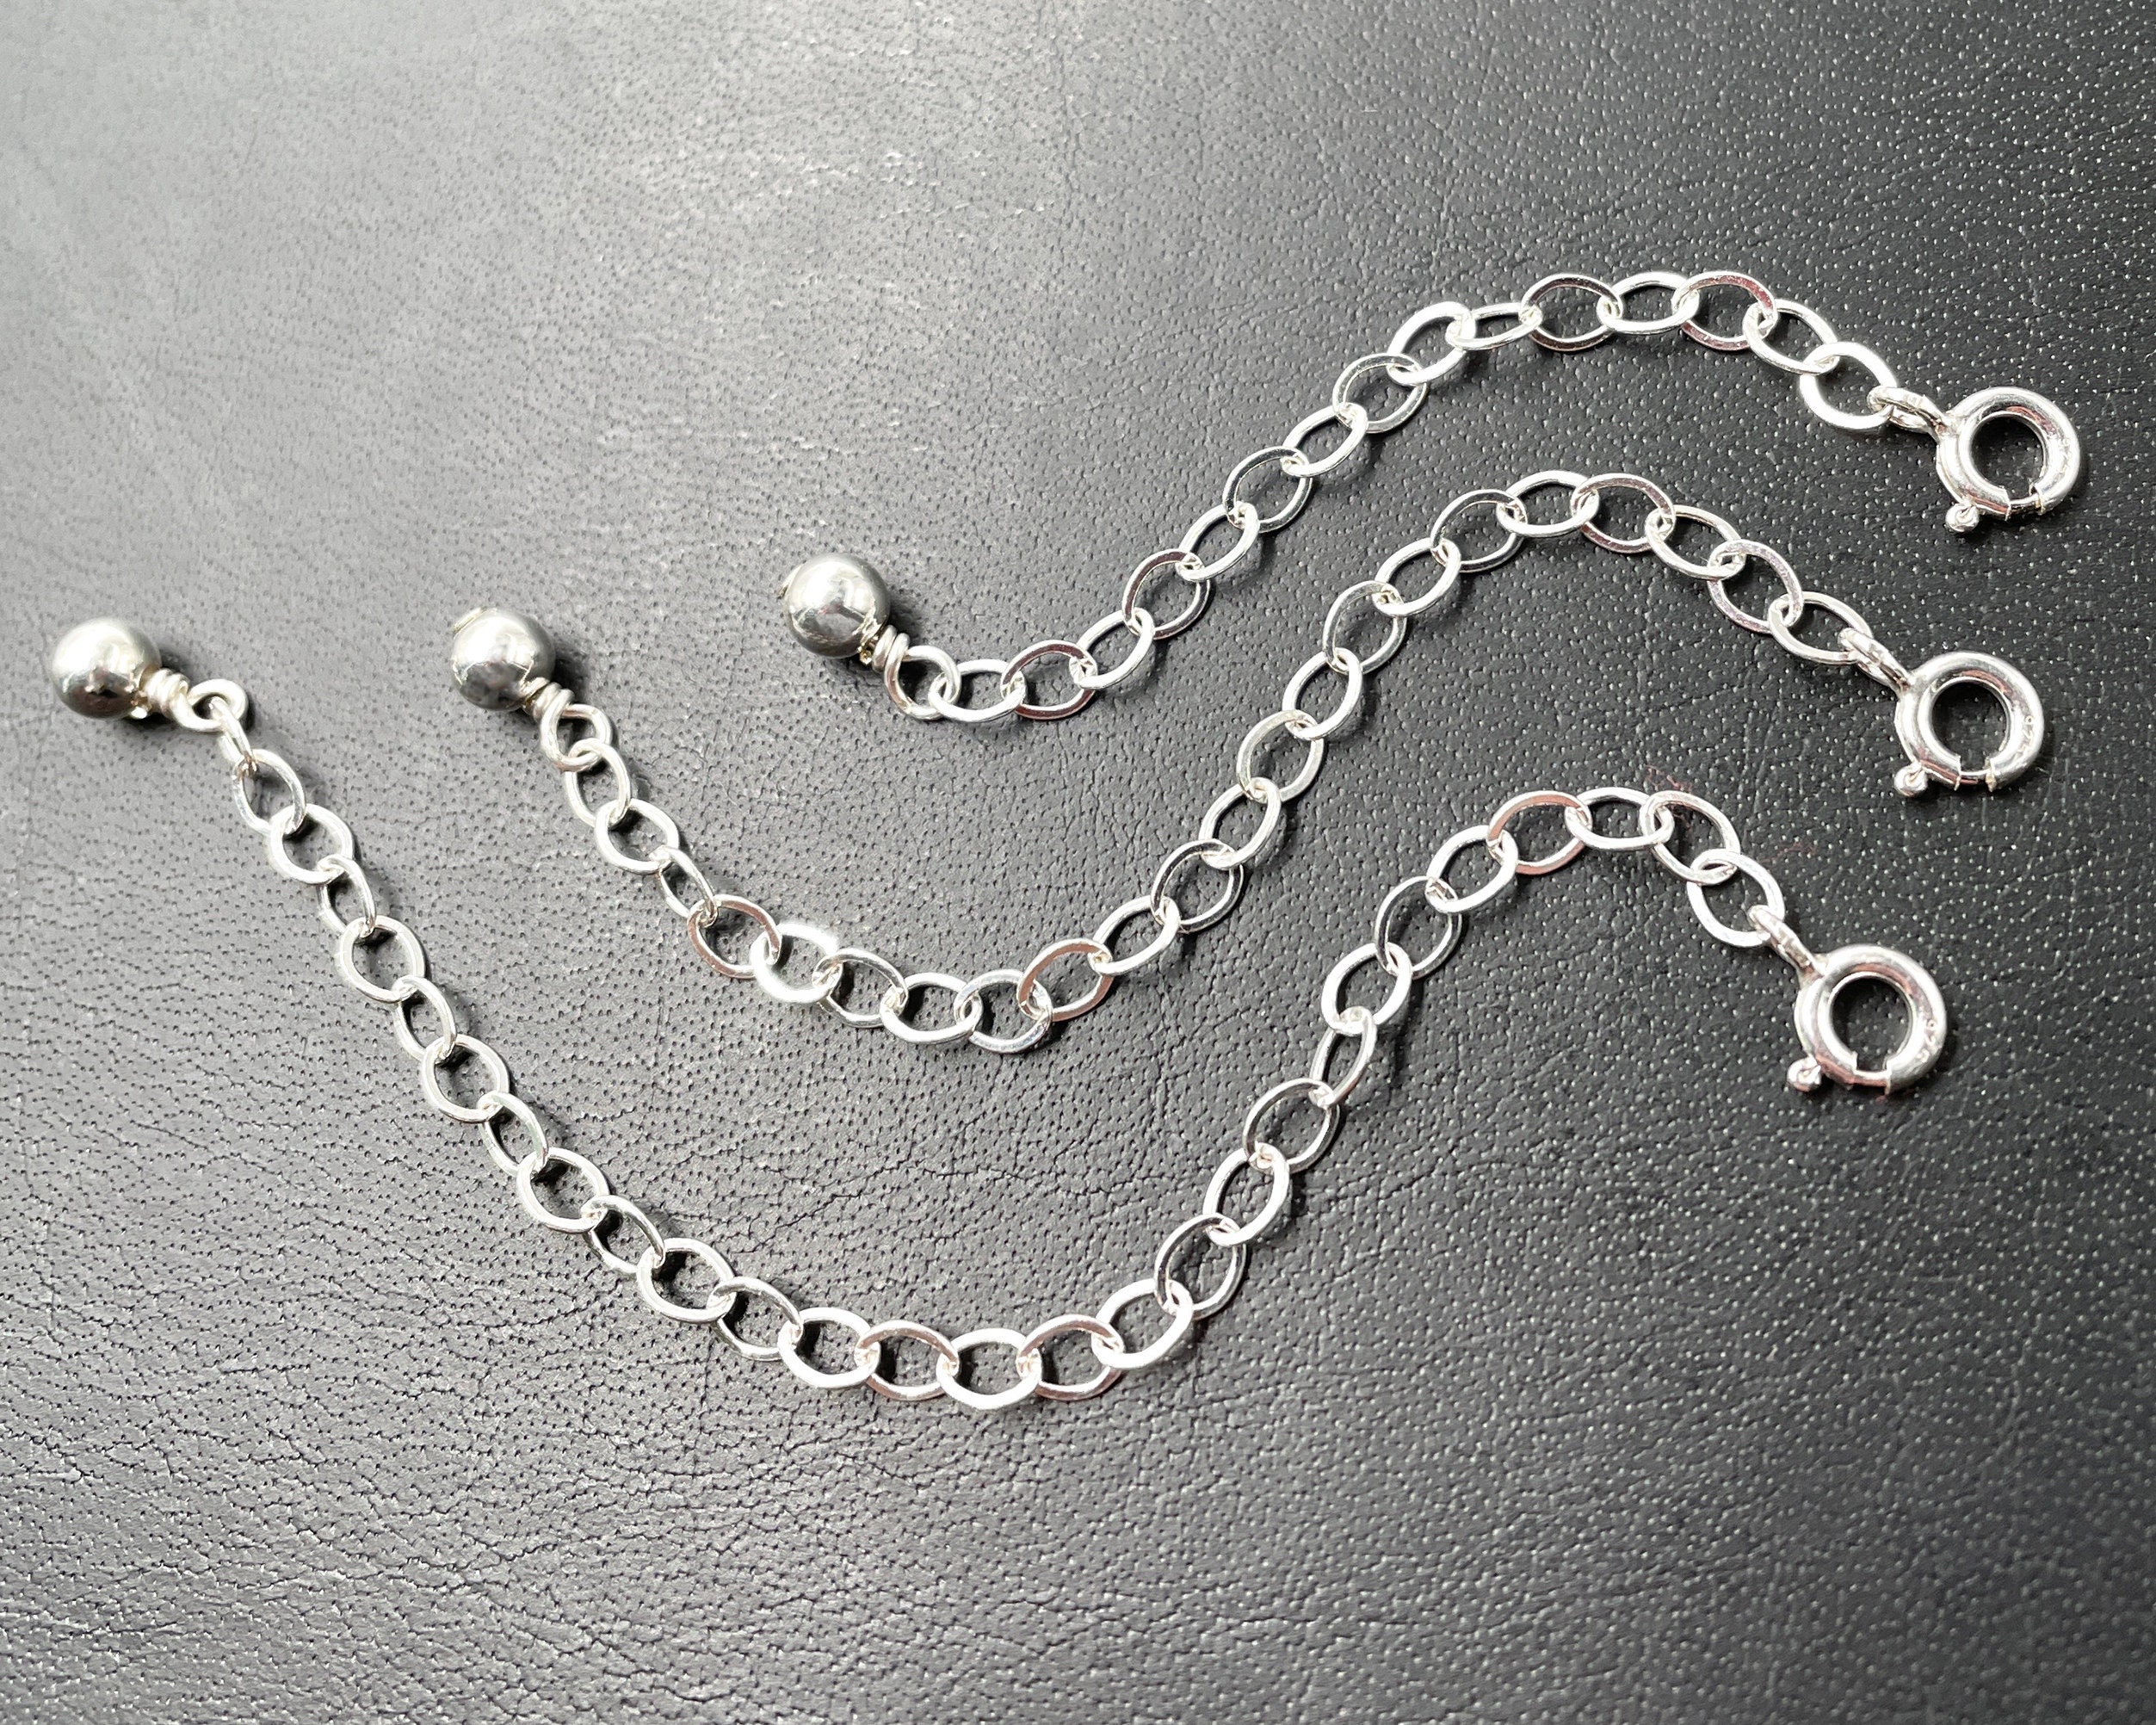 Adjustable Necklace Extender – The Silver Wren